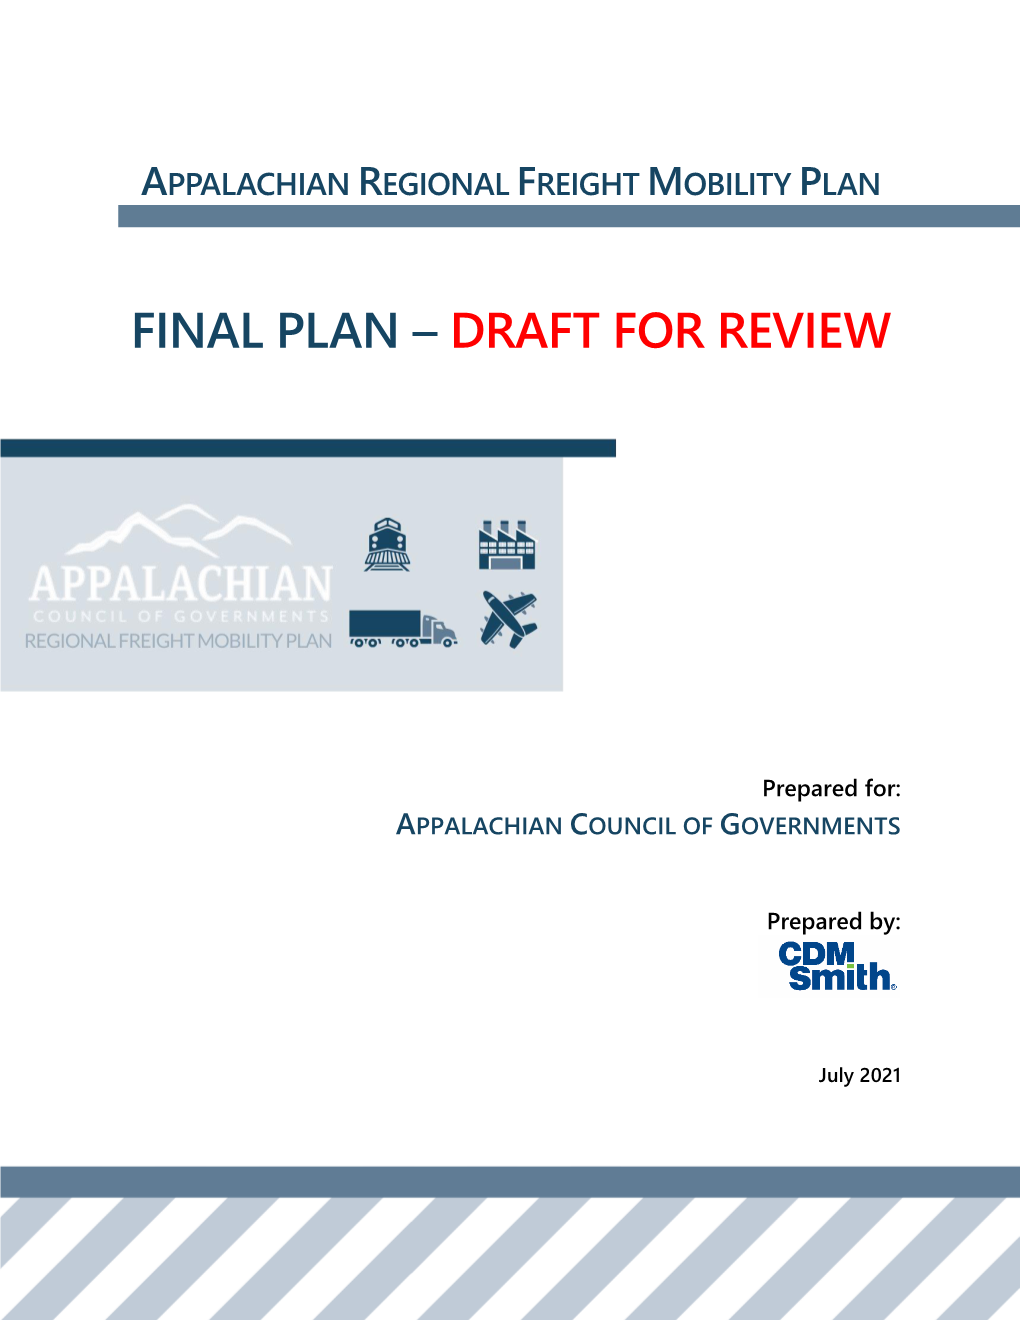 Appalachian Regional Freight Mobility Plan Final Plan – Draft for Review